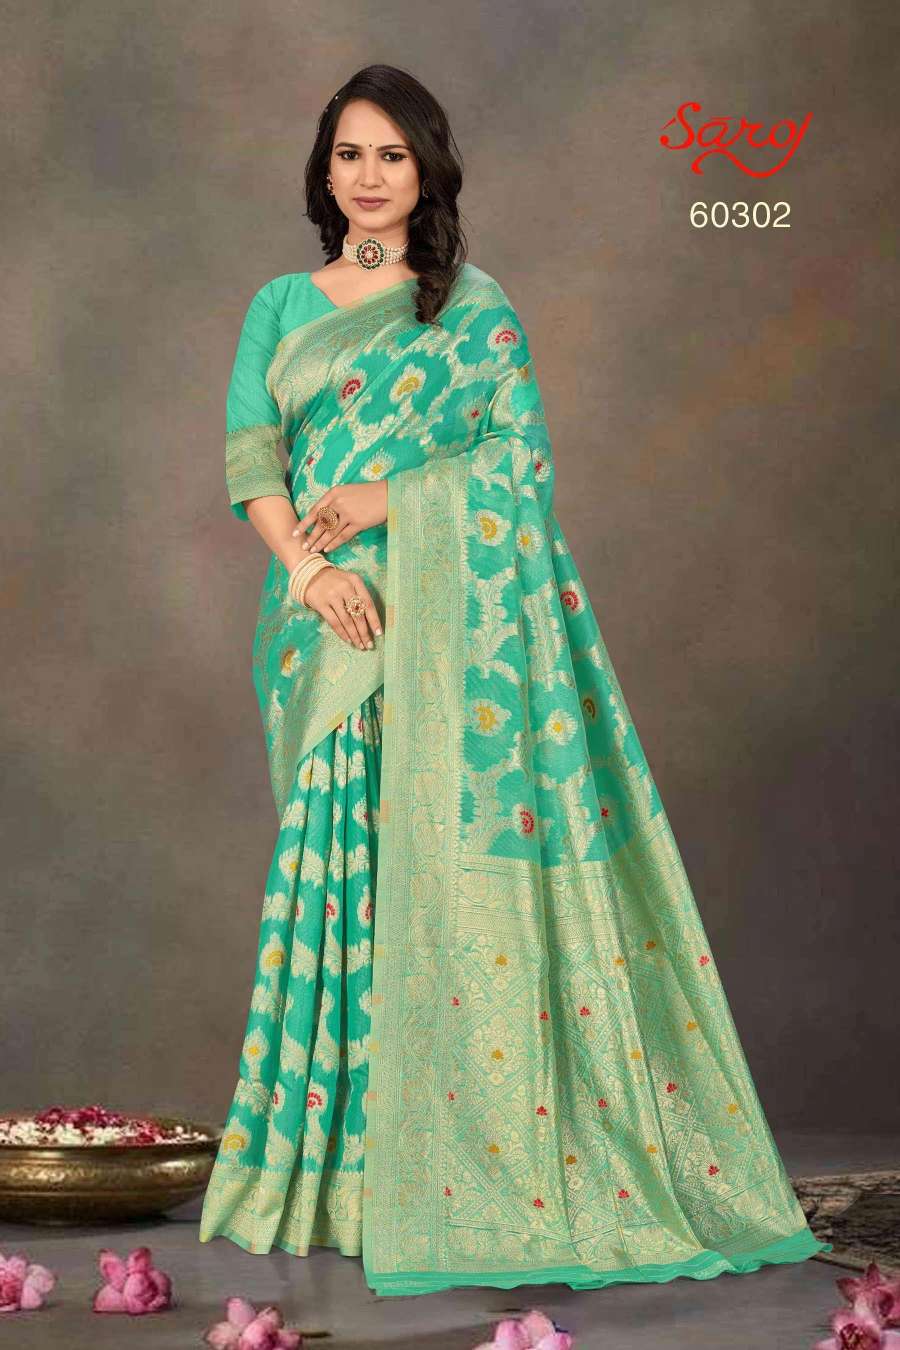 Saroj textile presents Kanakdhara vol-2 Cotton Designer sarees catalogue